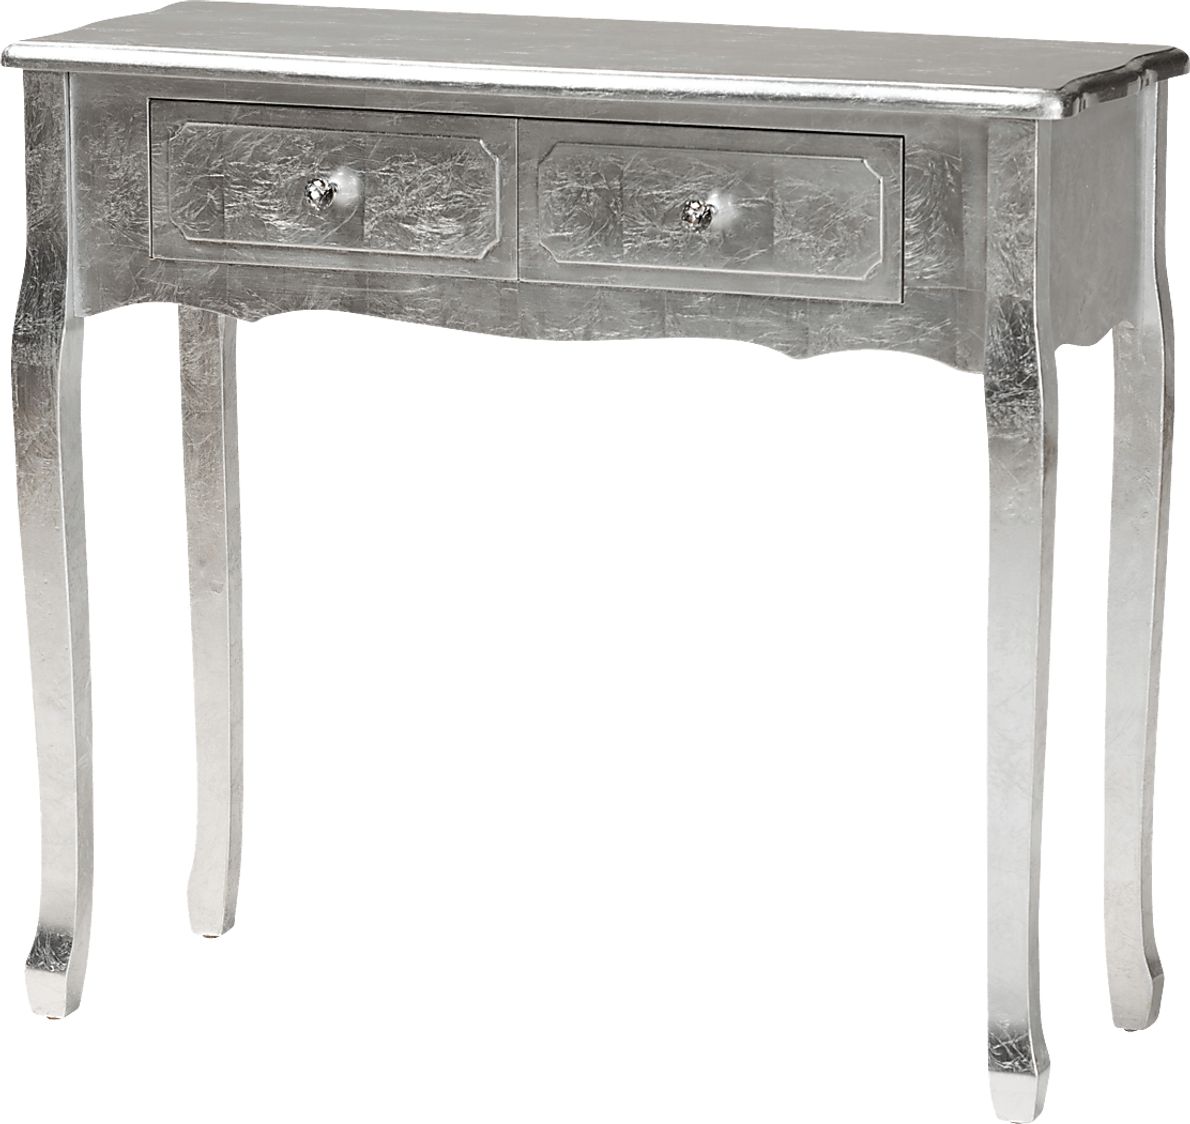 Brinkhoff I Silver Sofa Table